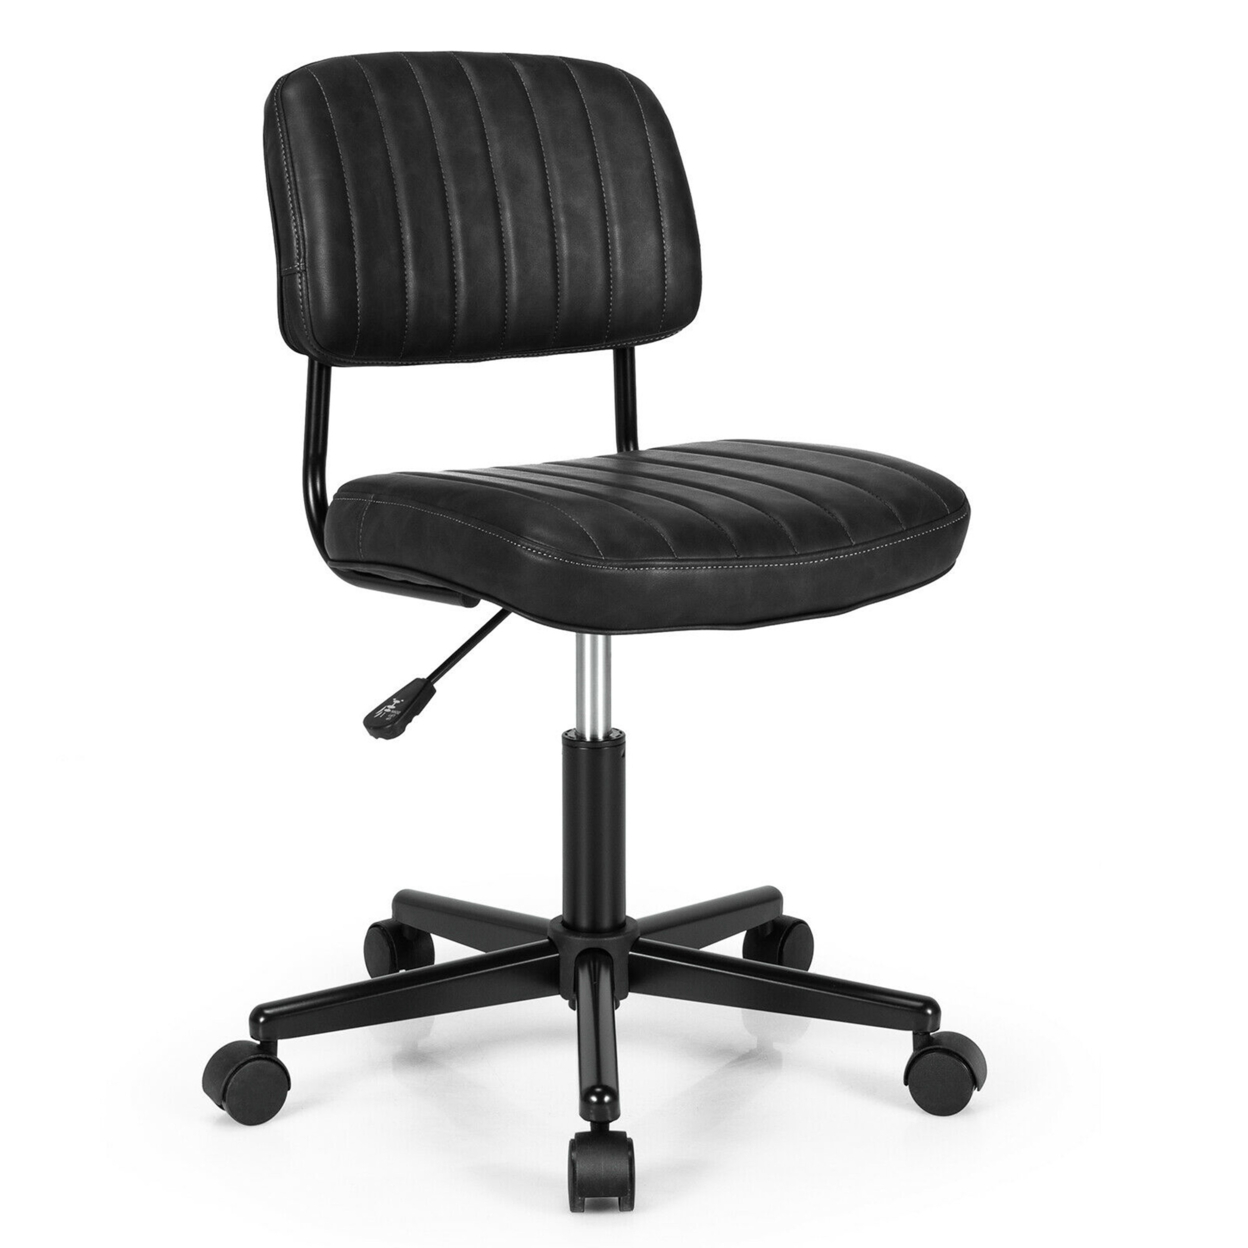 PU Leather Office Chair Adjustable Swivel Task Chair W/ Backrest - Black